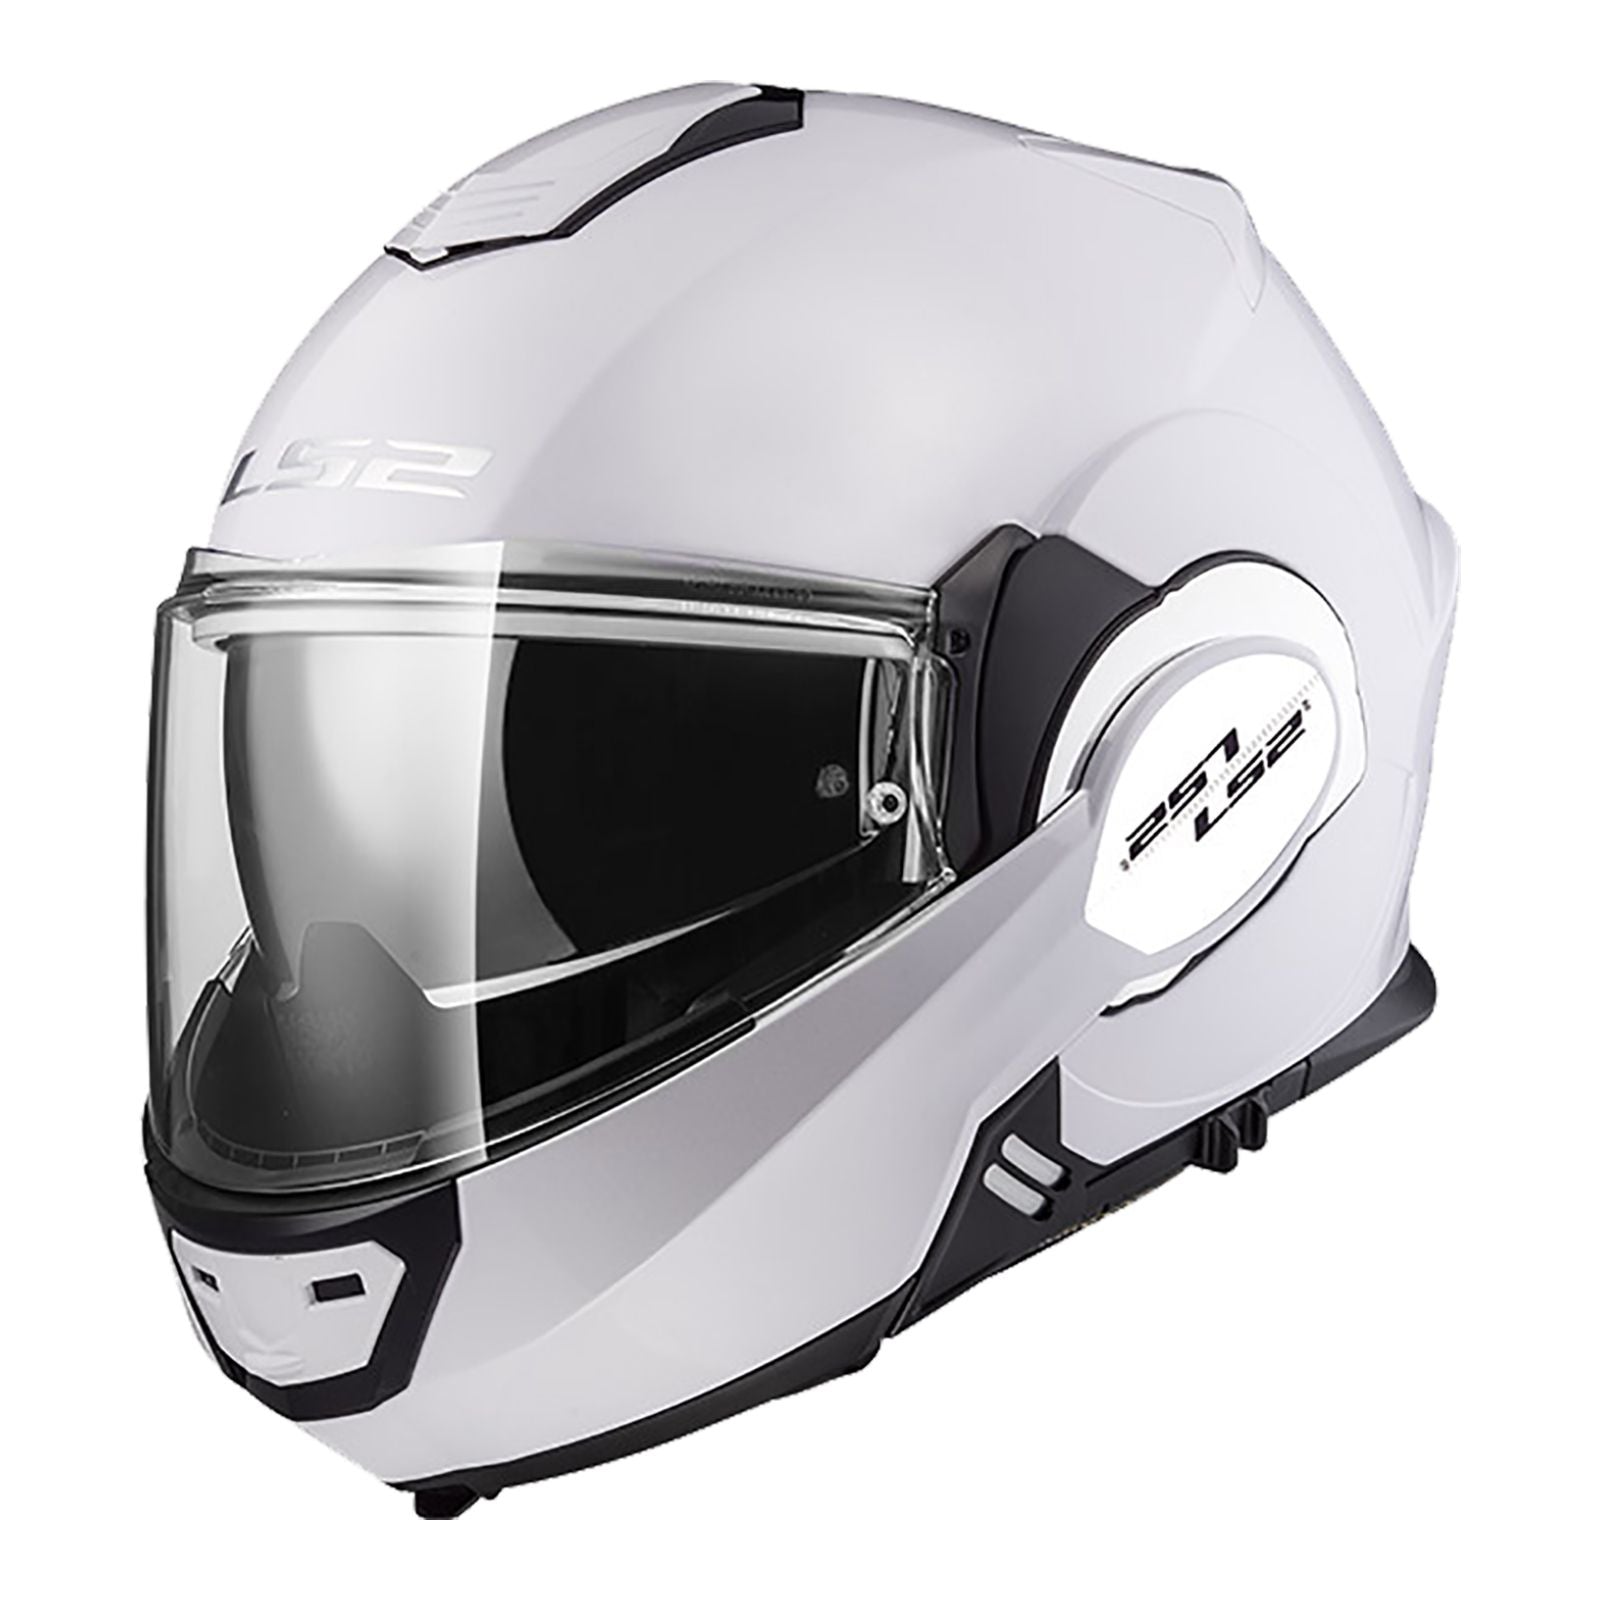 New LS2 FF399 Valiant Helmet - White (XL) #LS2FF399SOLWXL